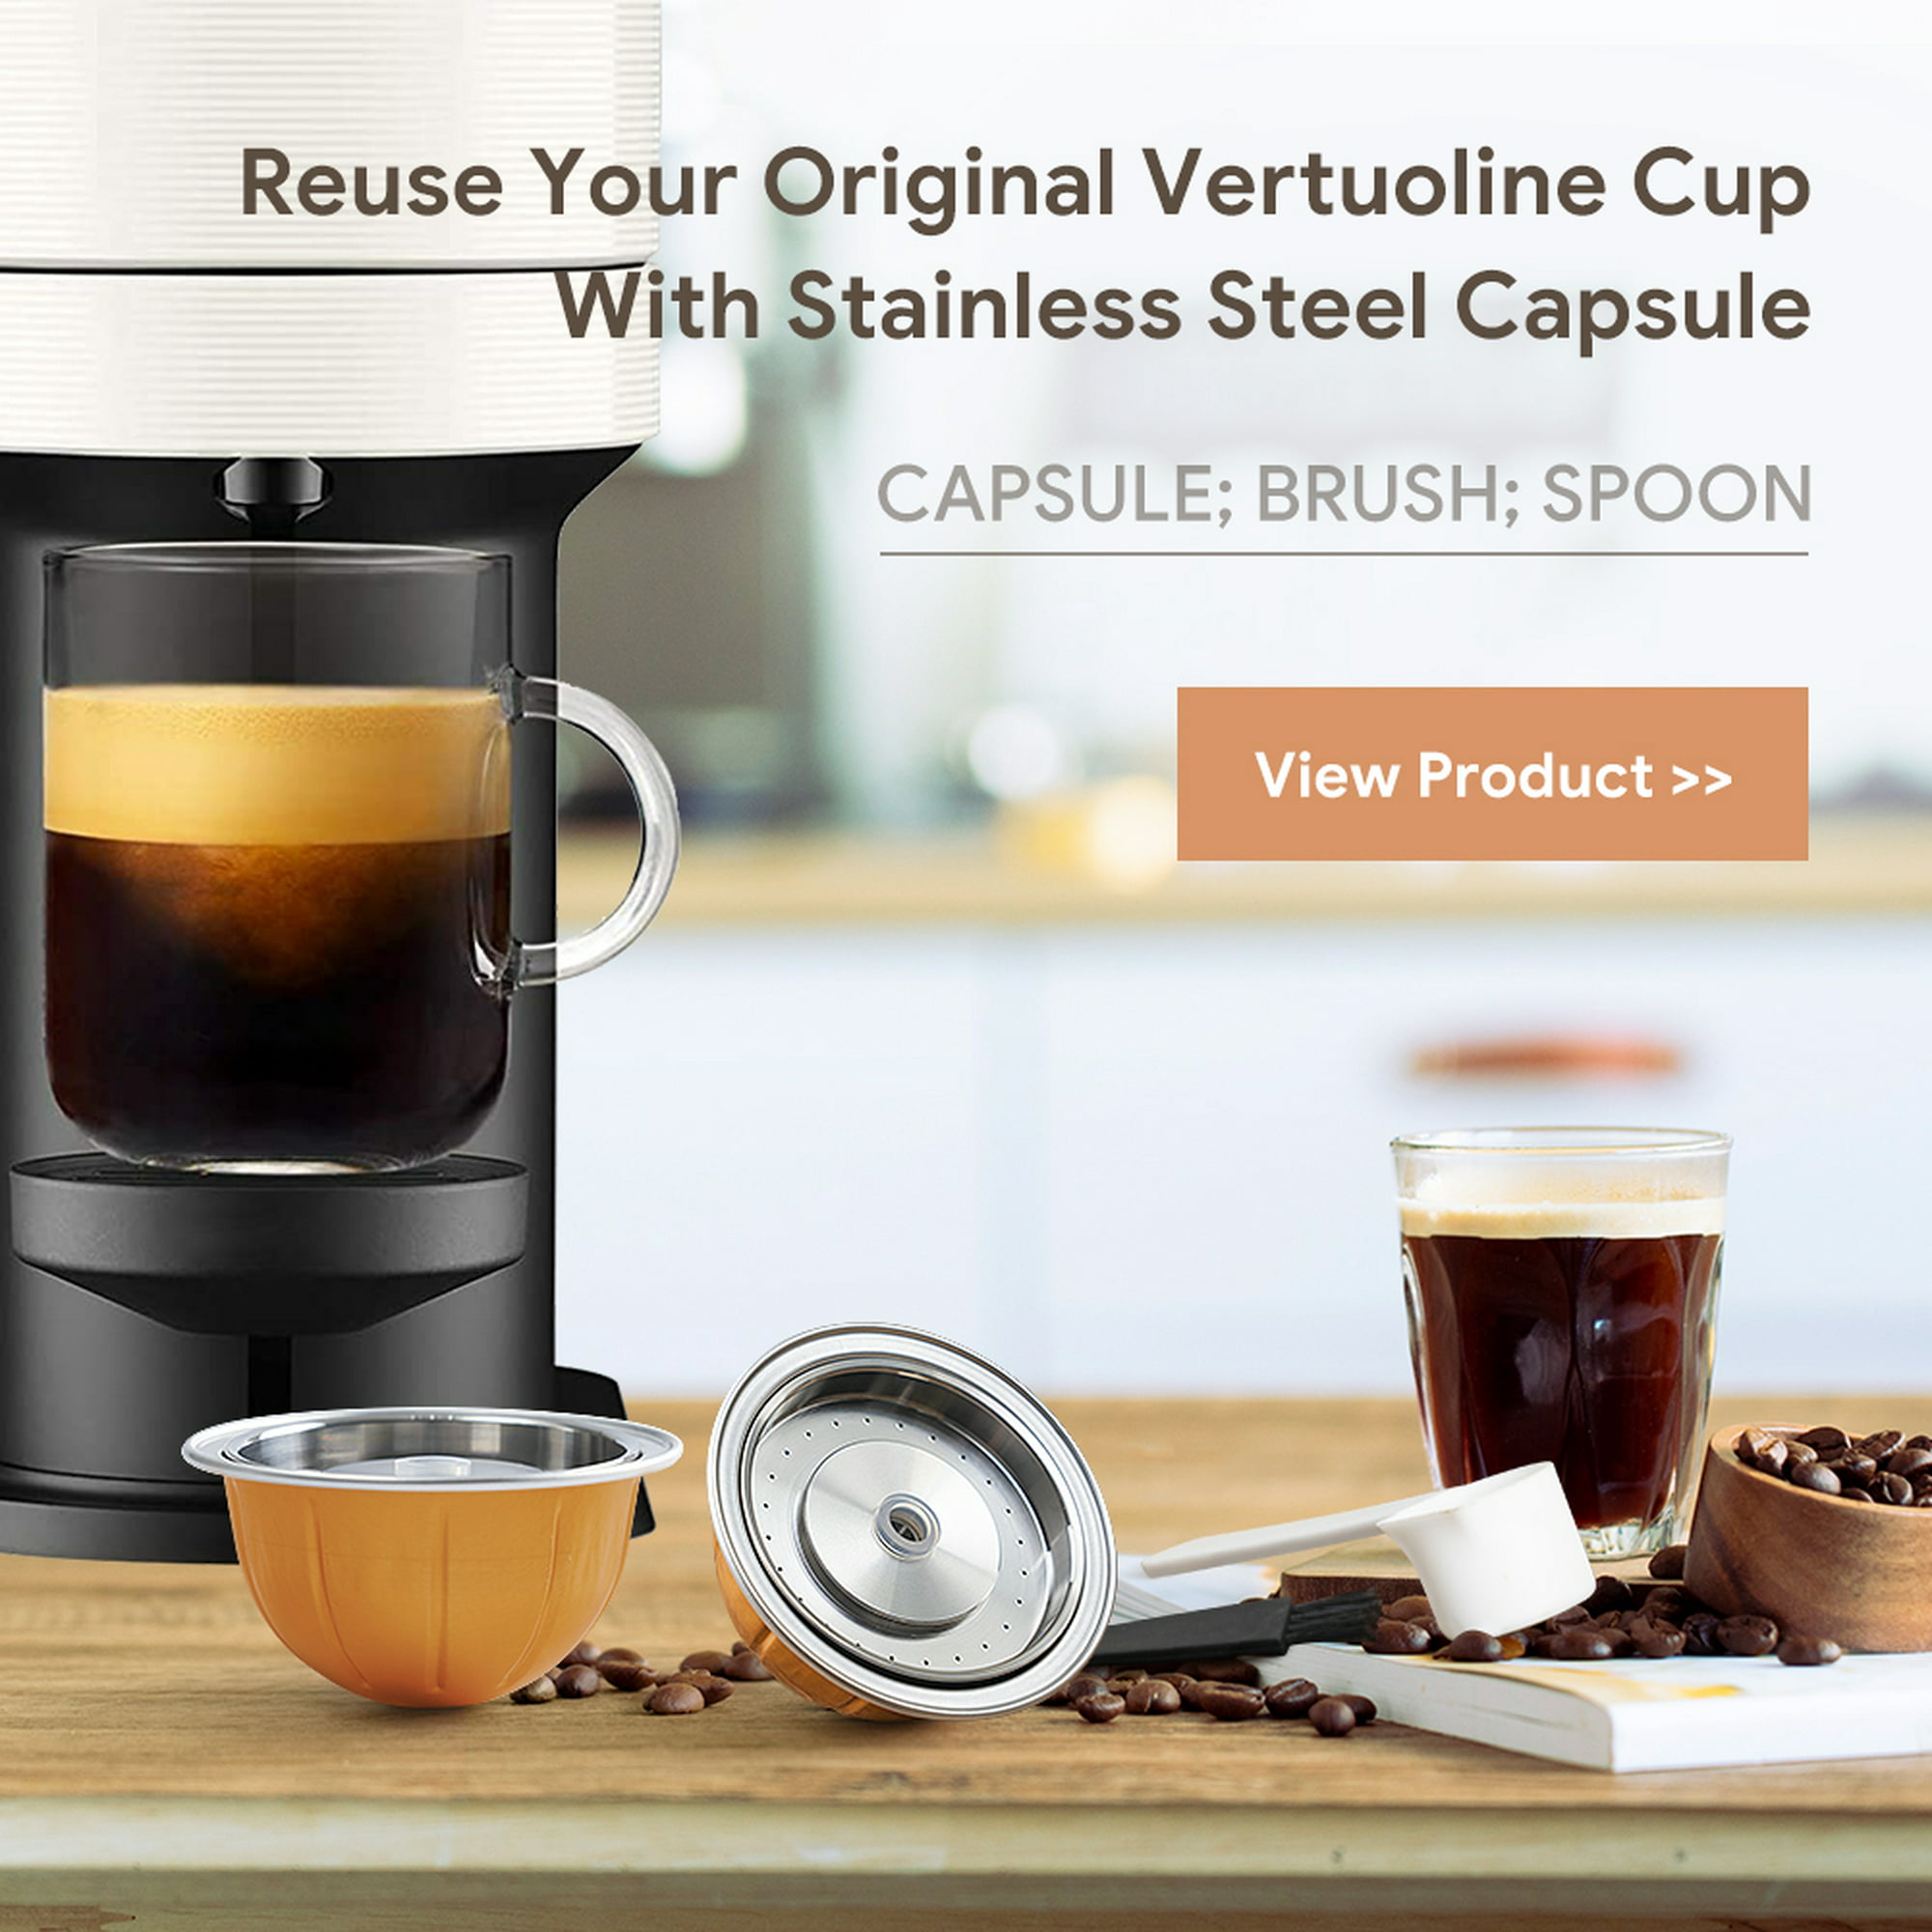 Cápsula de café reutilizable Nespresso Vertuo POP, filtro de